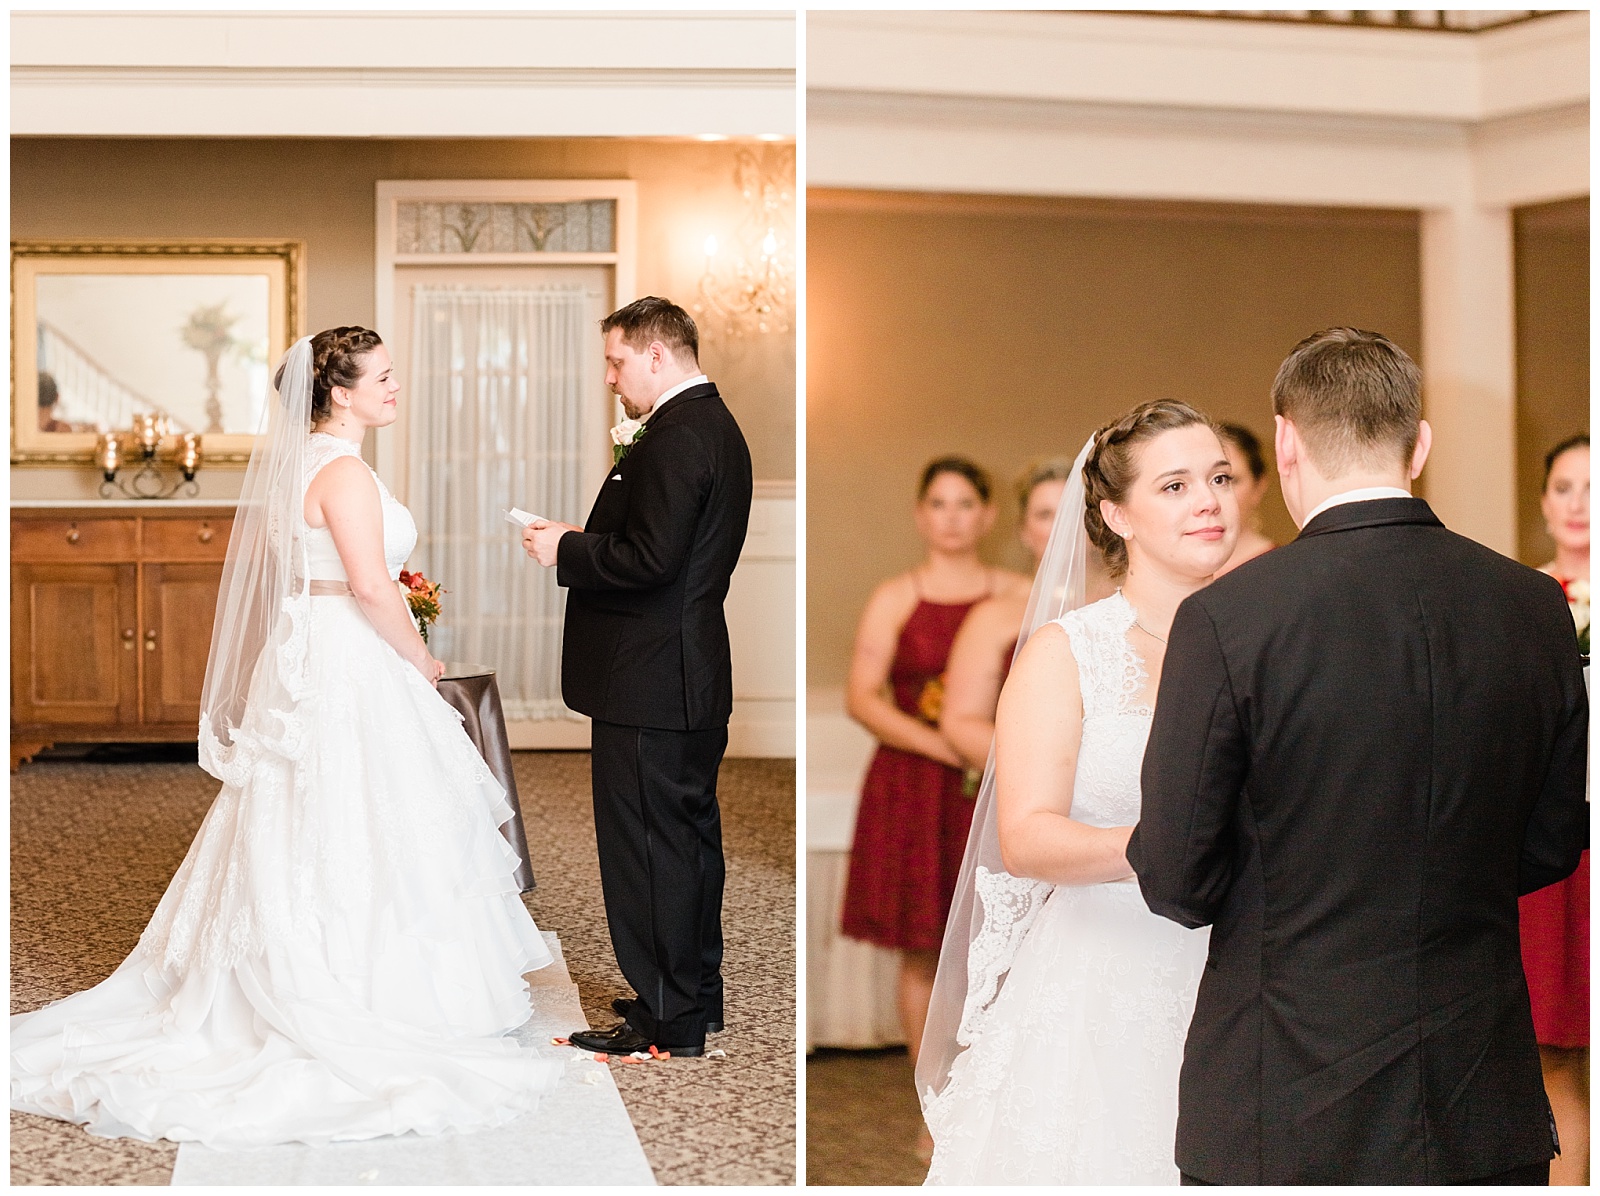 Ceremony,David's Country Inn,Fall Wedding,Hackettstown,NJ Wedding Photographer,Vows,